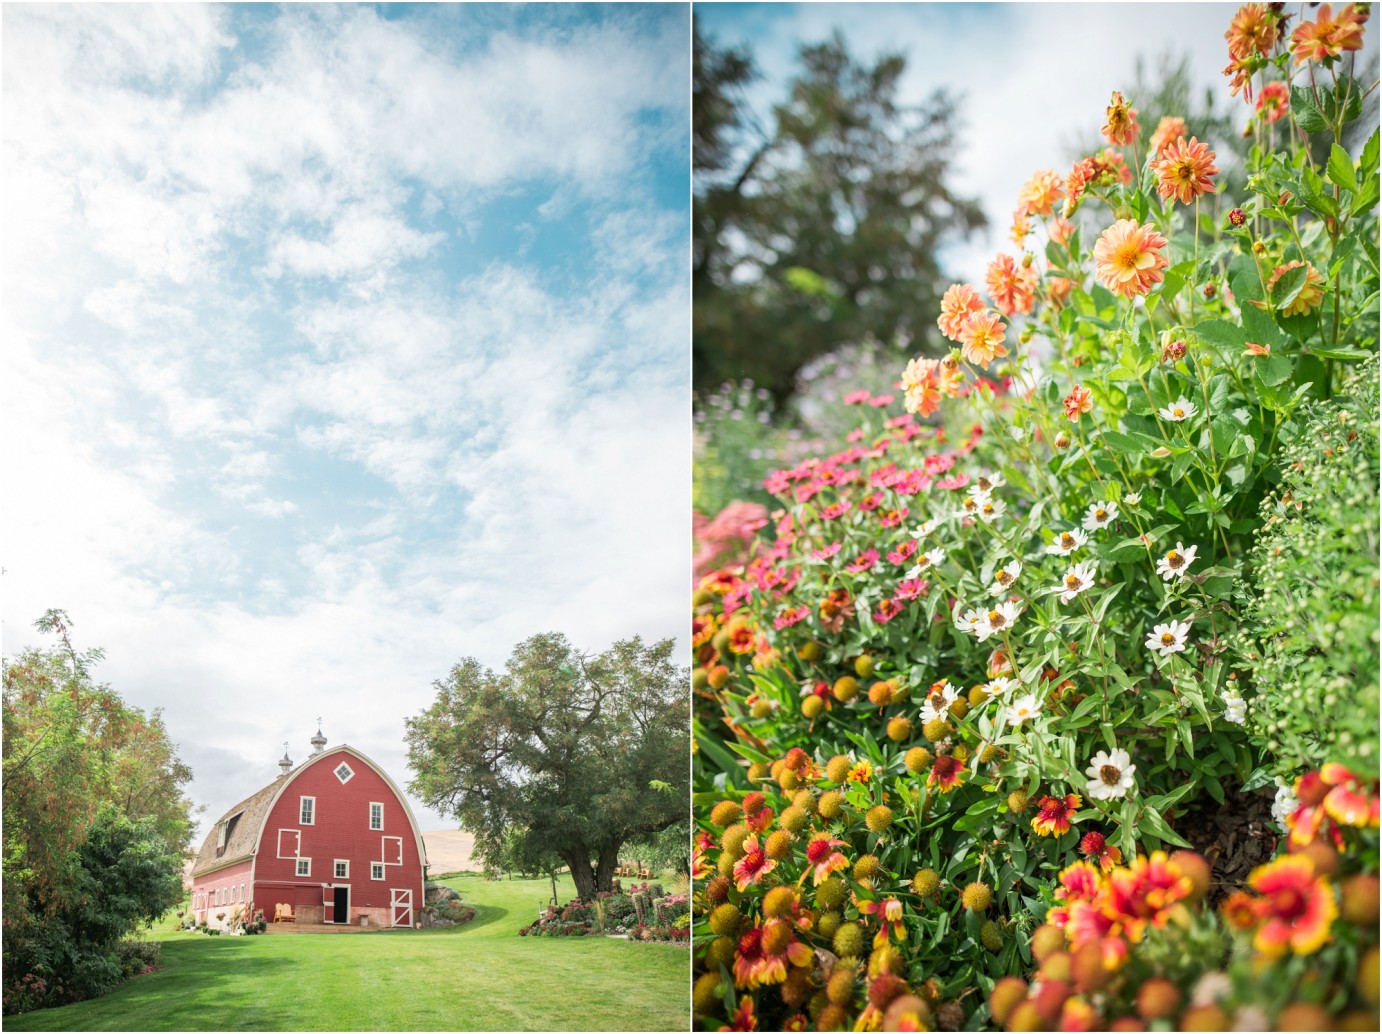 Winn Homestead barn and flowers photo